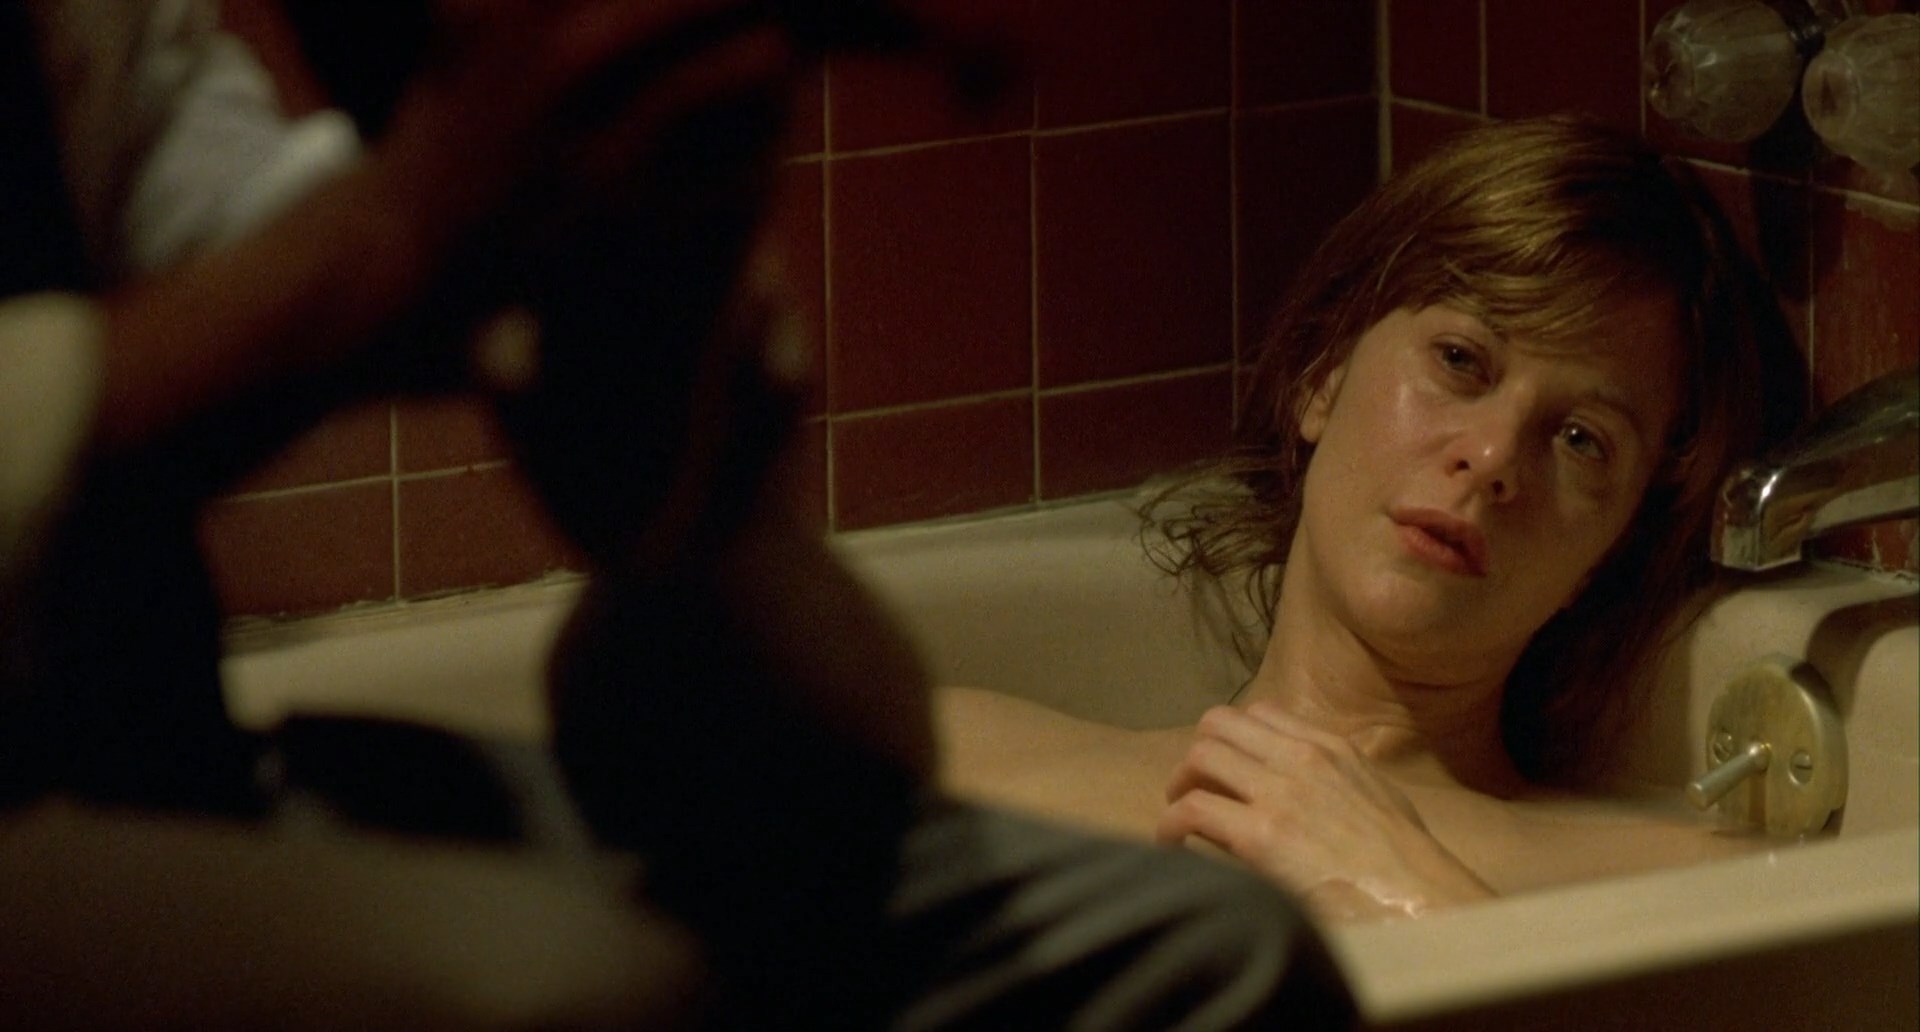 Topless Meg Ryan is sitting on a tub.